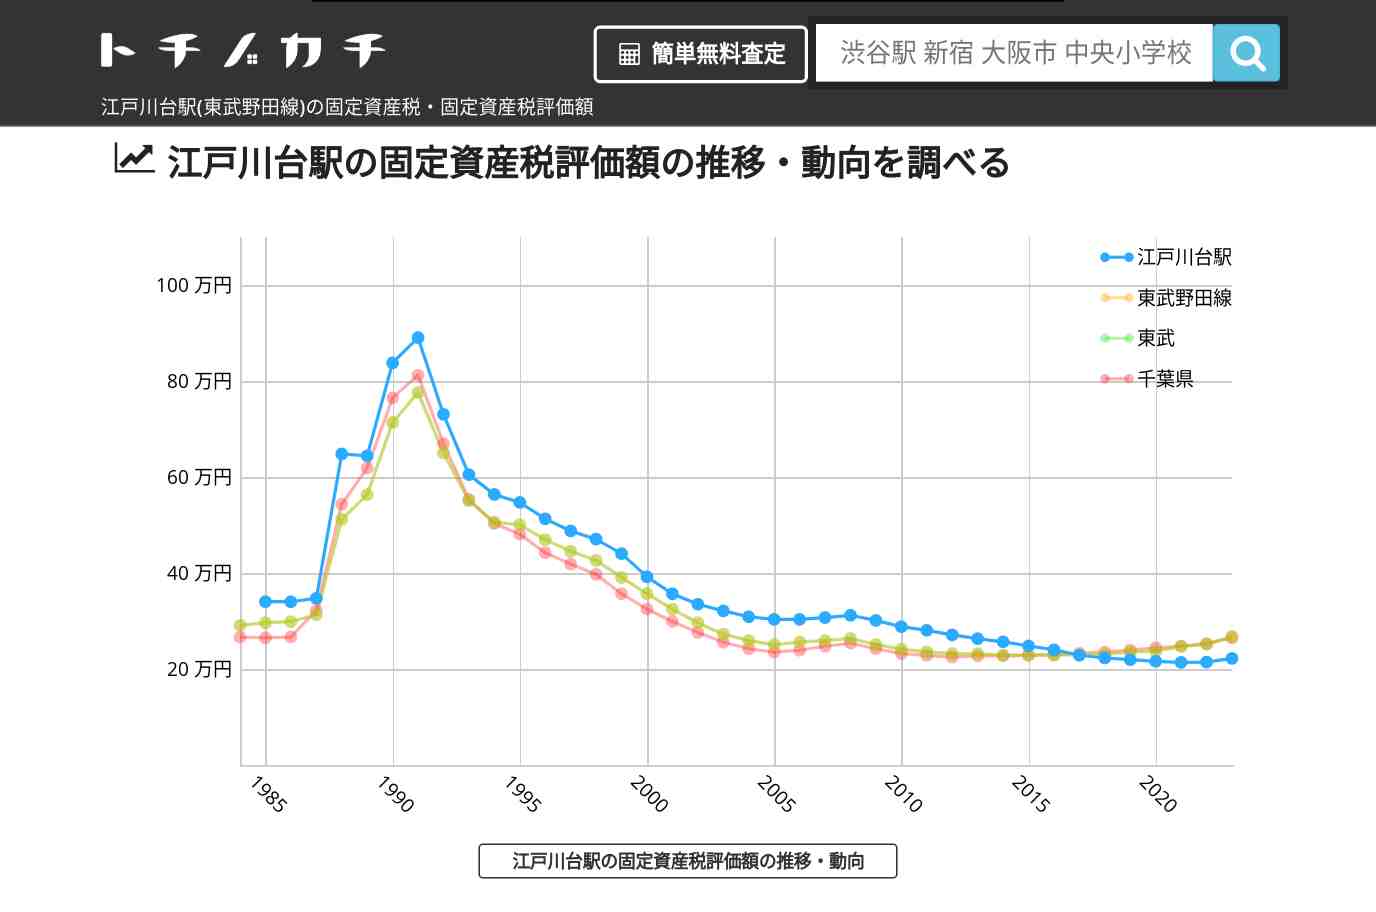 江戸川台駅(東武野田線)の固定資産税・固定資産税評価額 | トチノカチ